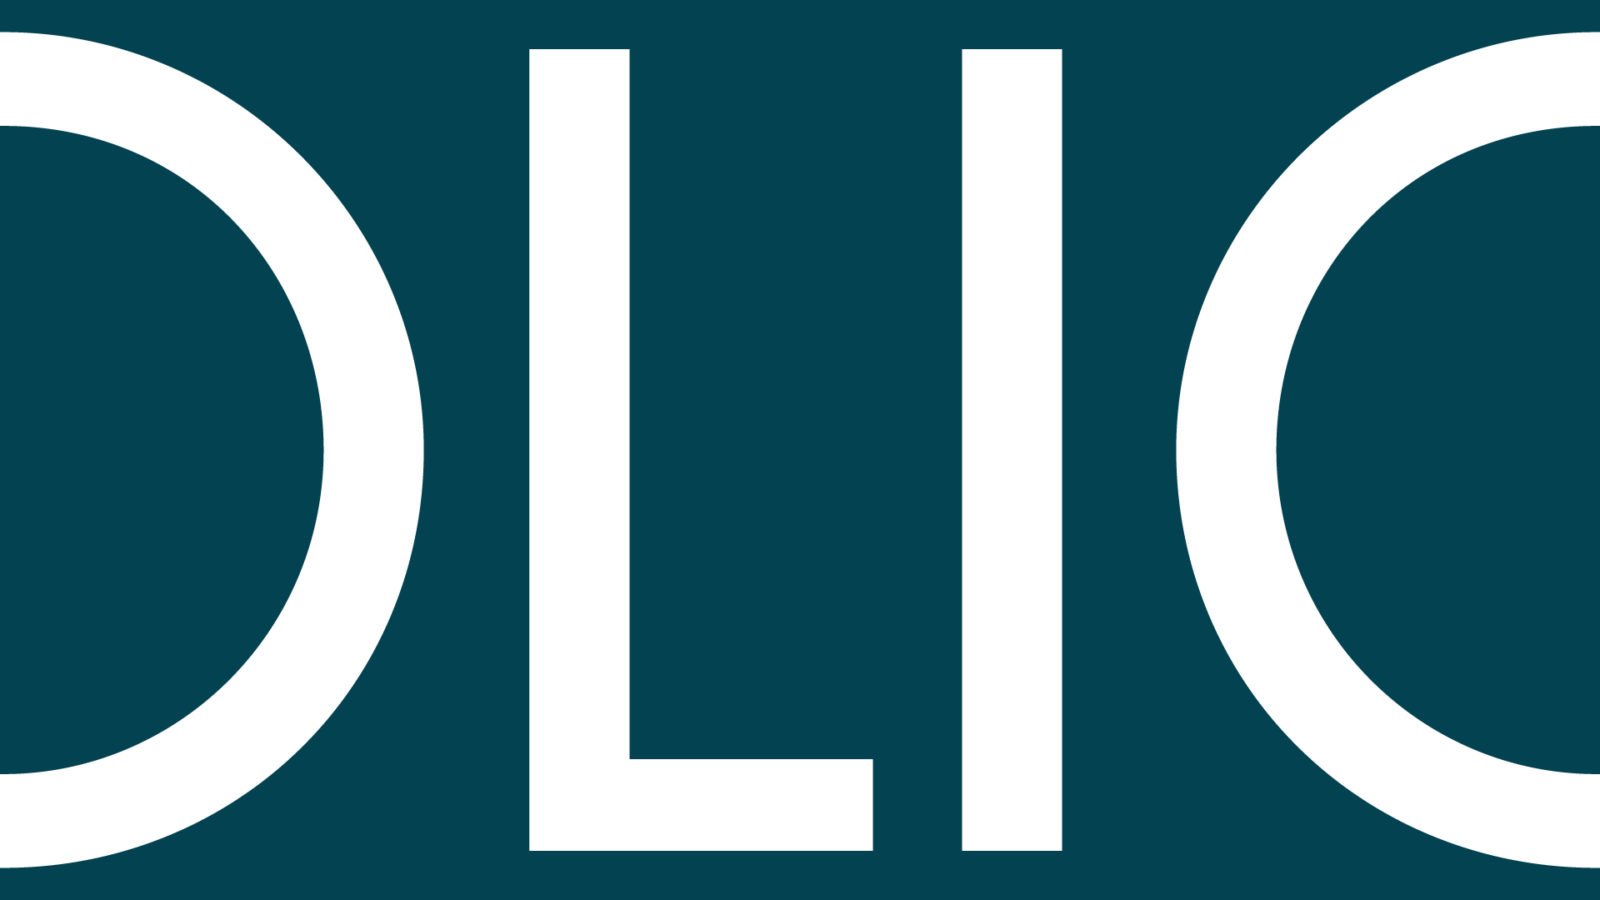 Olio Financial Planning Identity Branding Logo